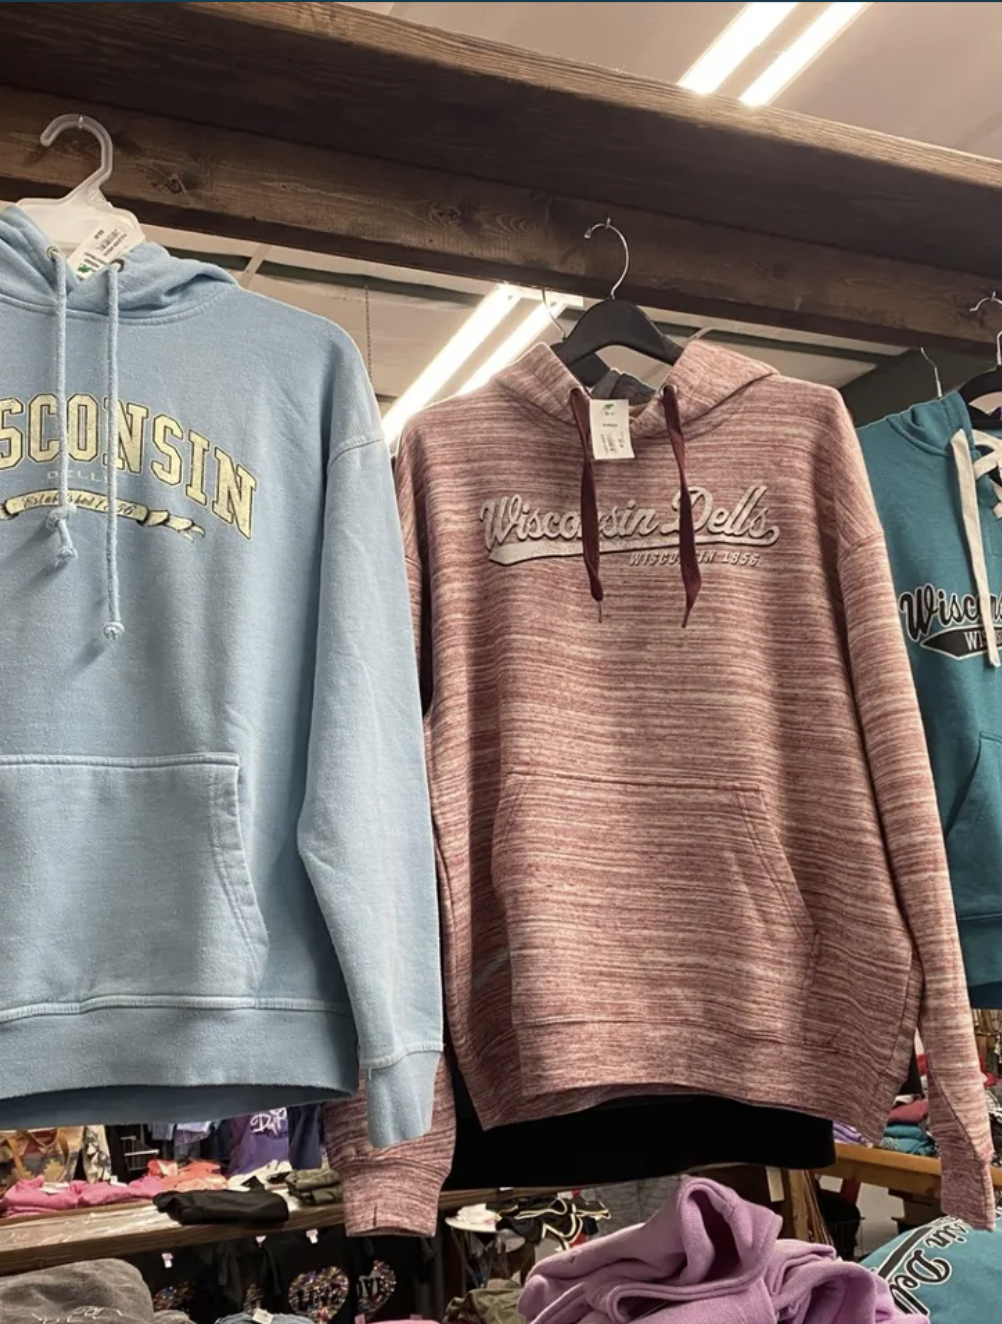 Wisconsin Dells hooded sweatshirts in a shop